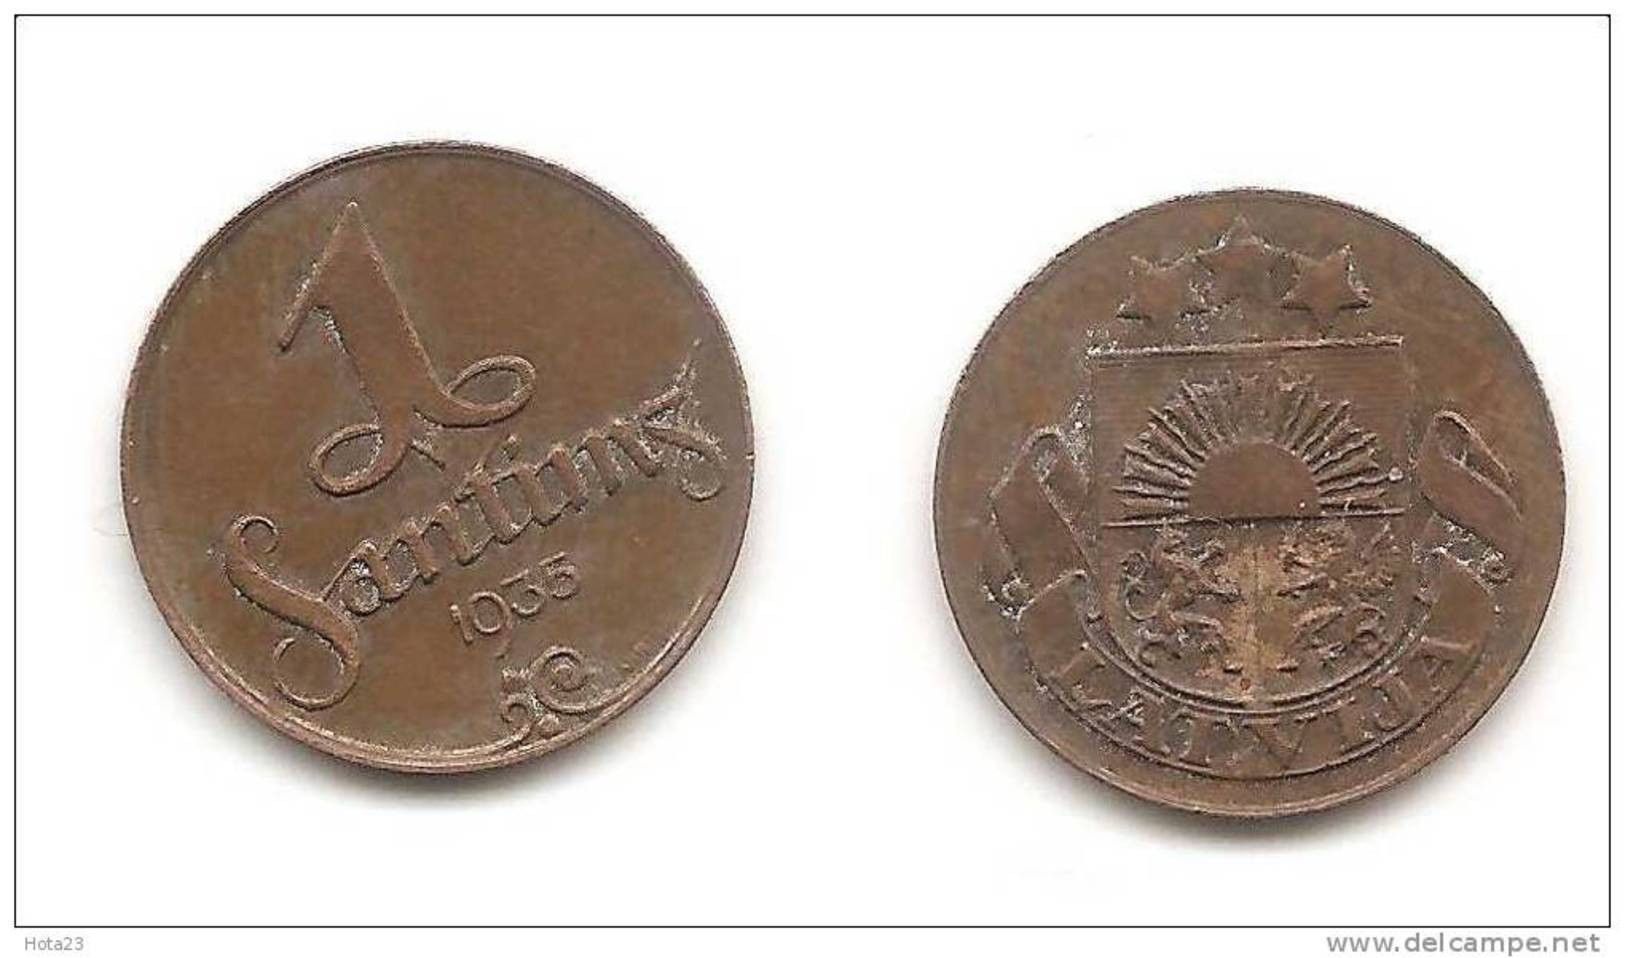 LATVIA 1 SANTIMI  COIN  1935 Y - Latvia